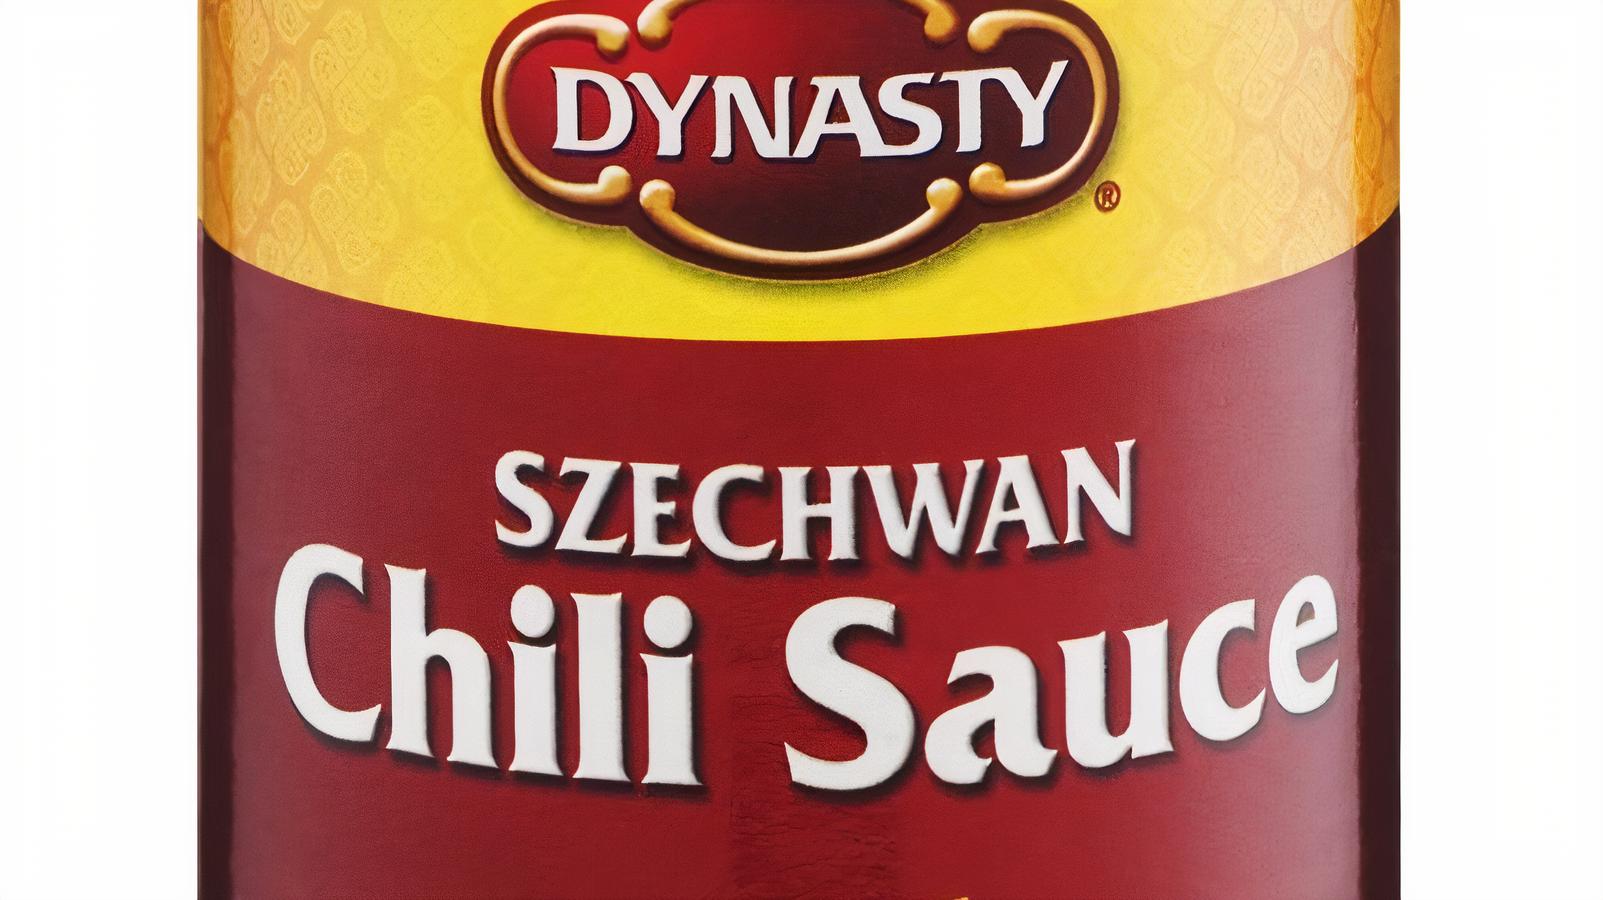 Dynasty Chili Sauce, Szechwan (6.5oz)